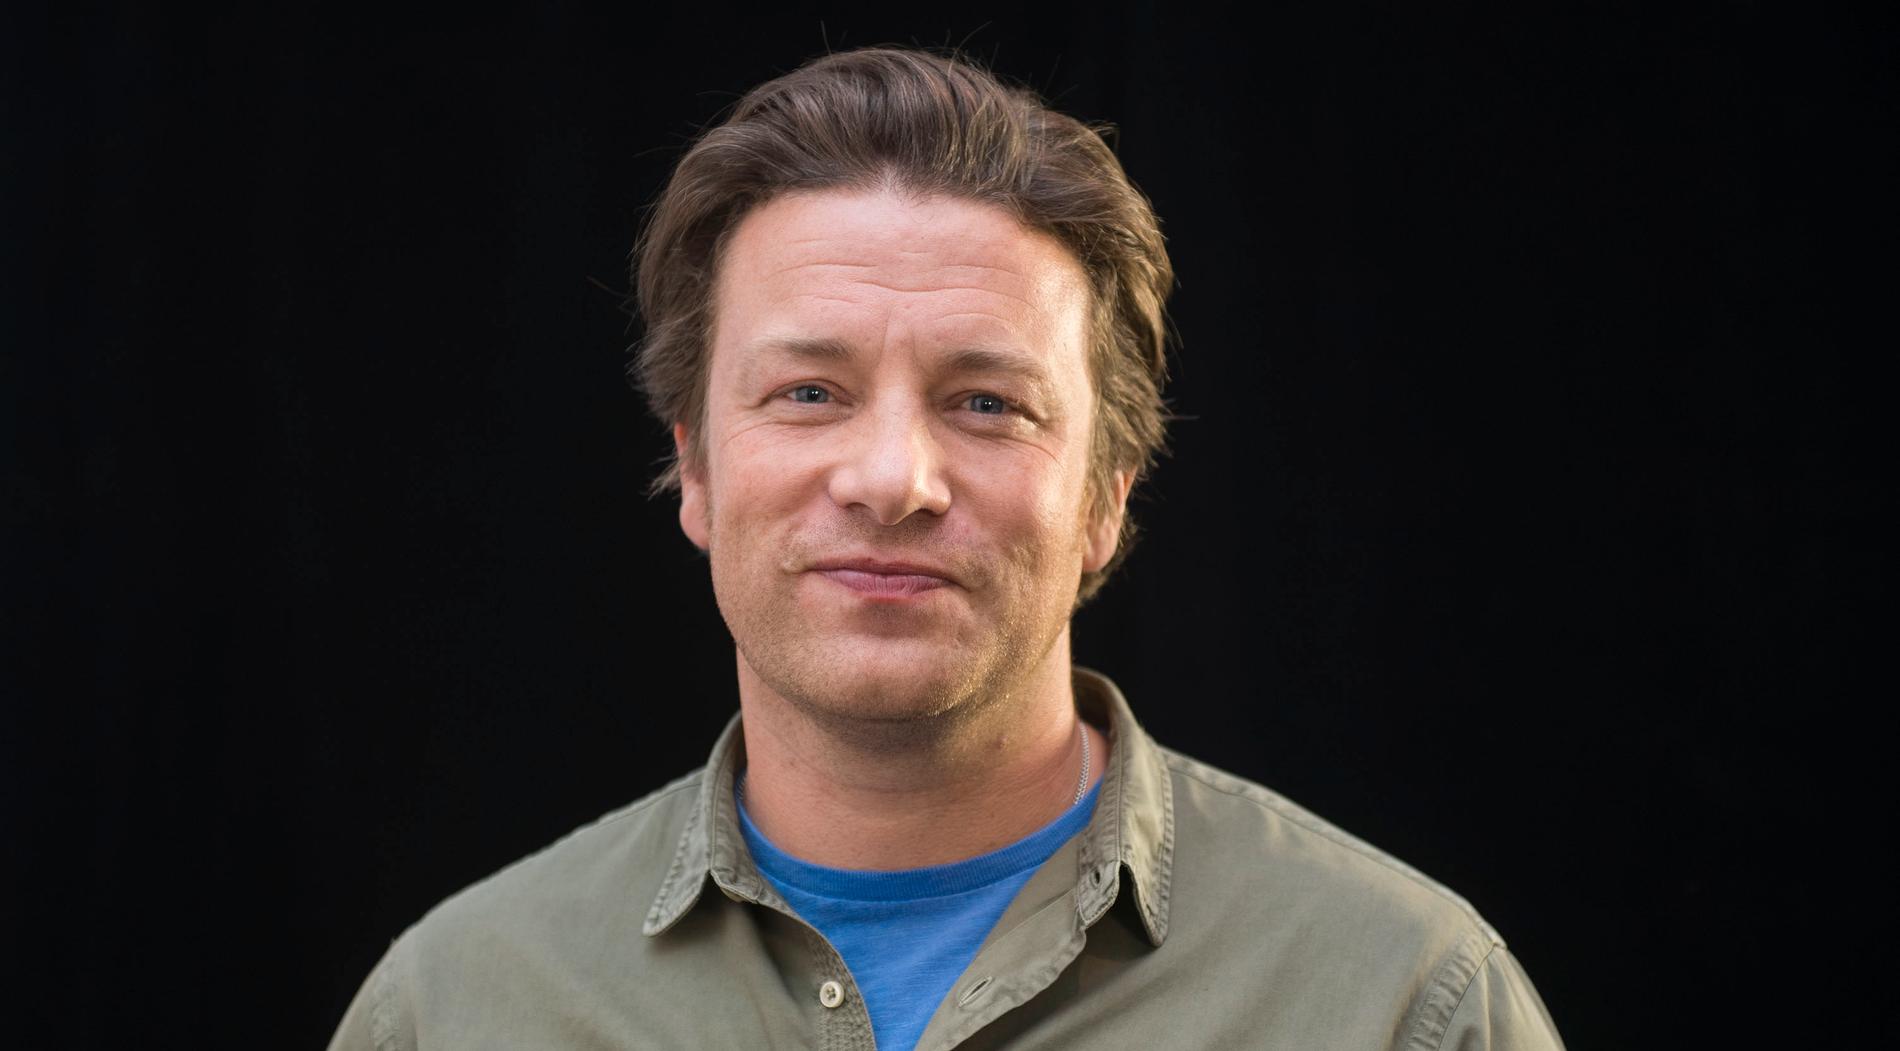 Jamie Oliver.